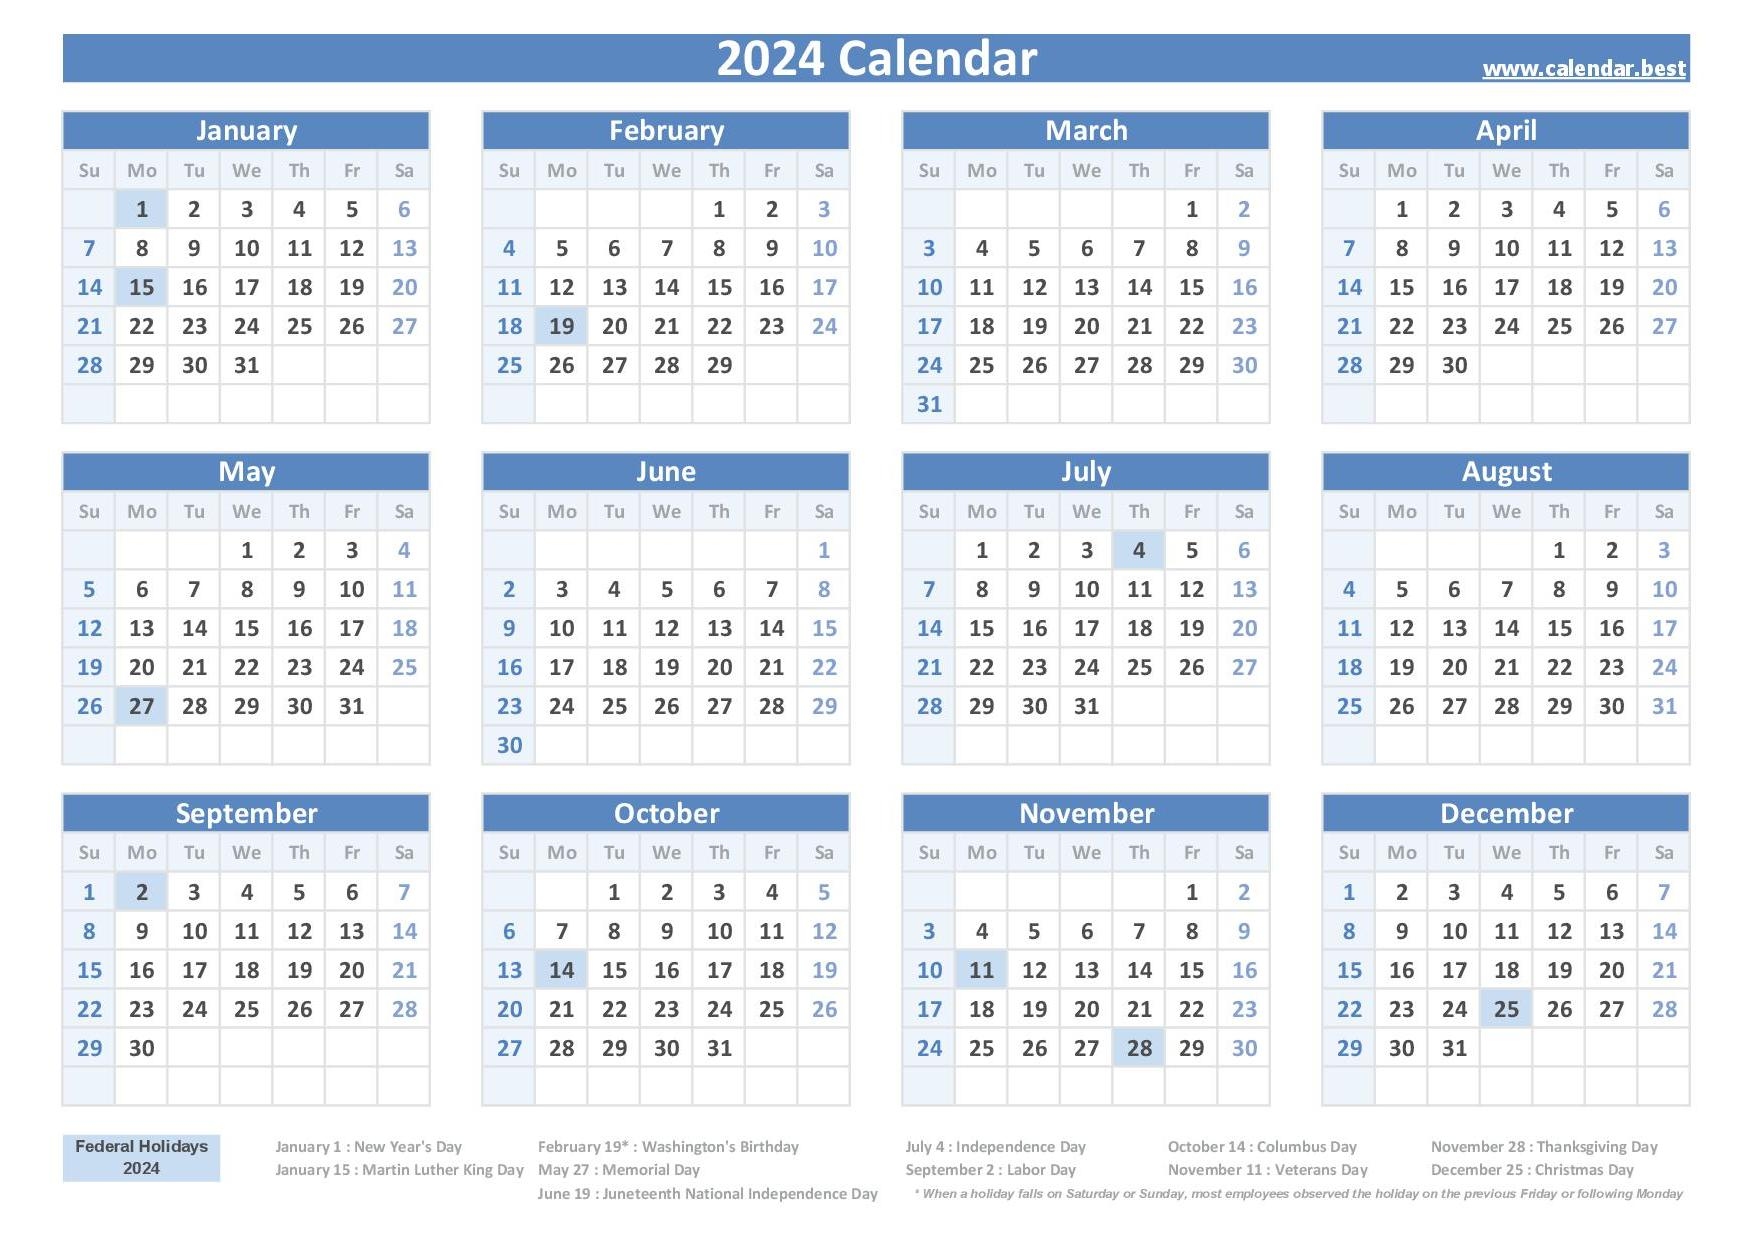 2024 Us Federal Holiday Calendar Printable Bill Marjie - Free Printable 2024 Calendar With Holidays Easter